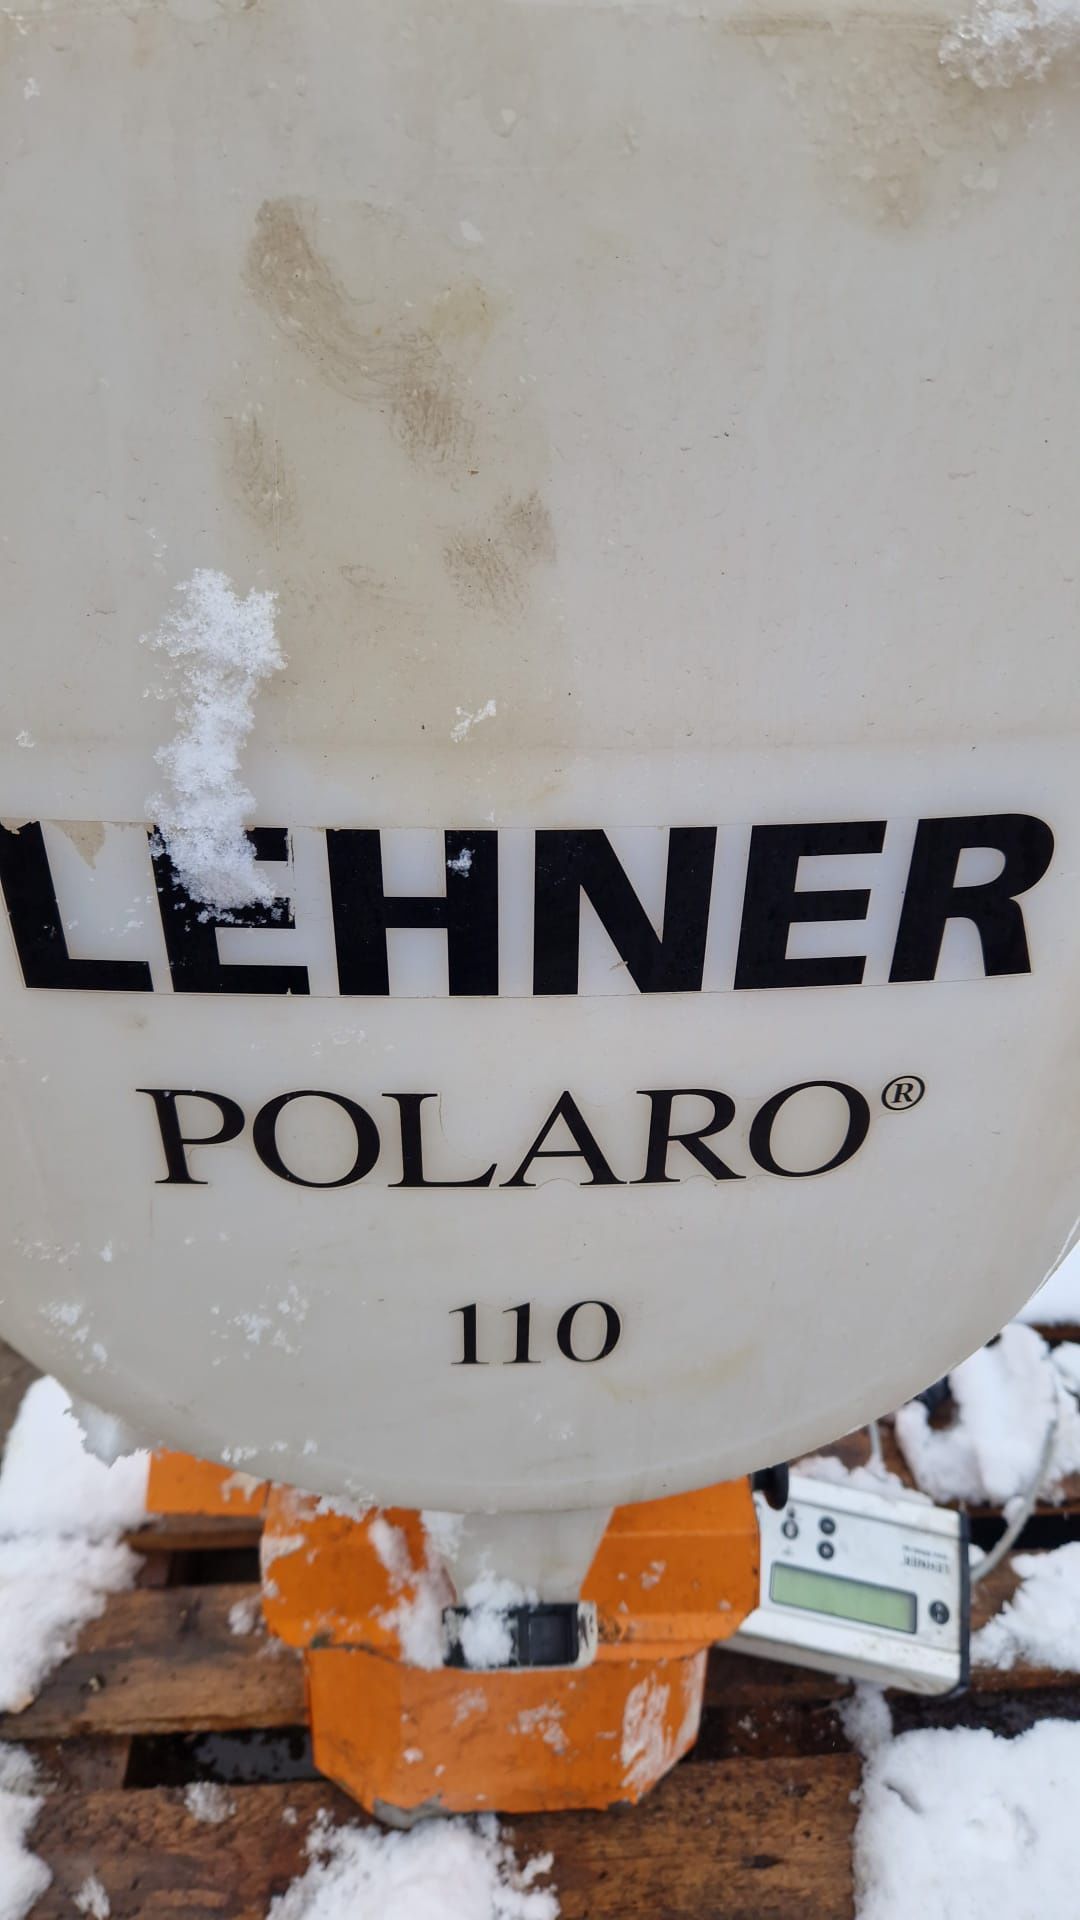 Lehner Polaro 110 piaskarka posypywarka mało używany stan bdb